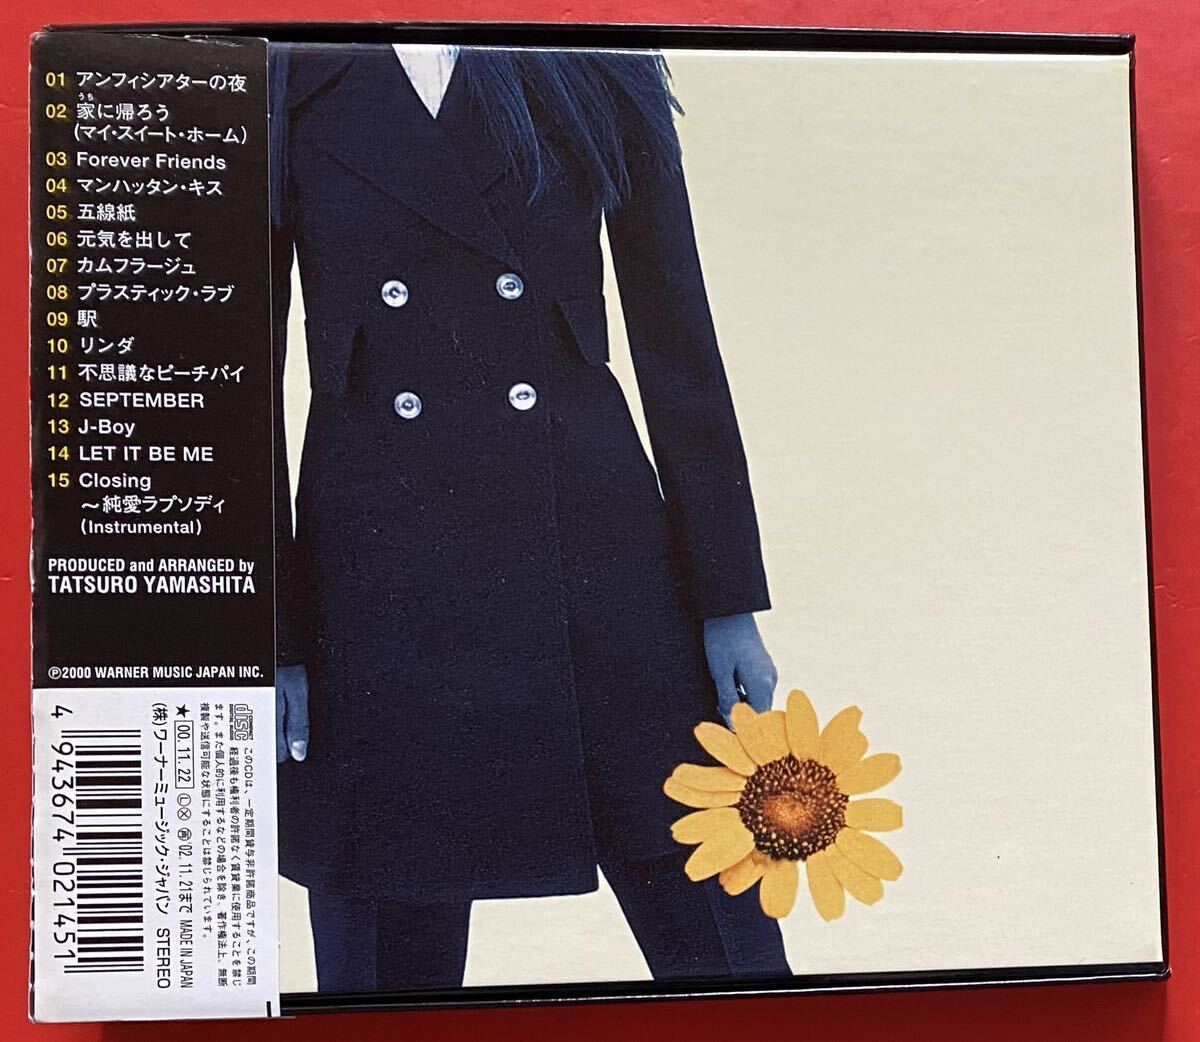 [CD] Takeuchi Mariya [ Hsu . Neal / Souvenir~Mariya Takeuchi Live] первый раз ограничение BOX specification [02210440]